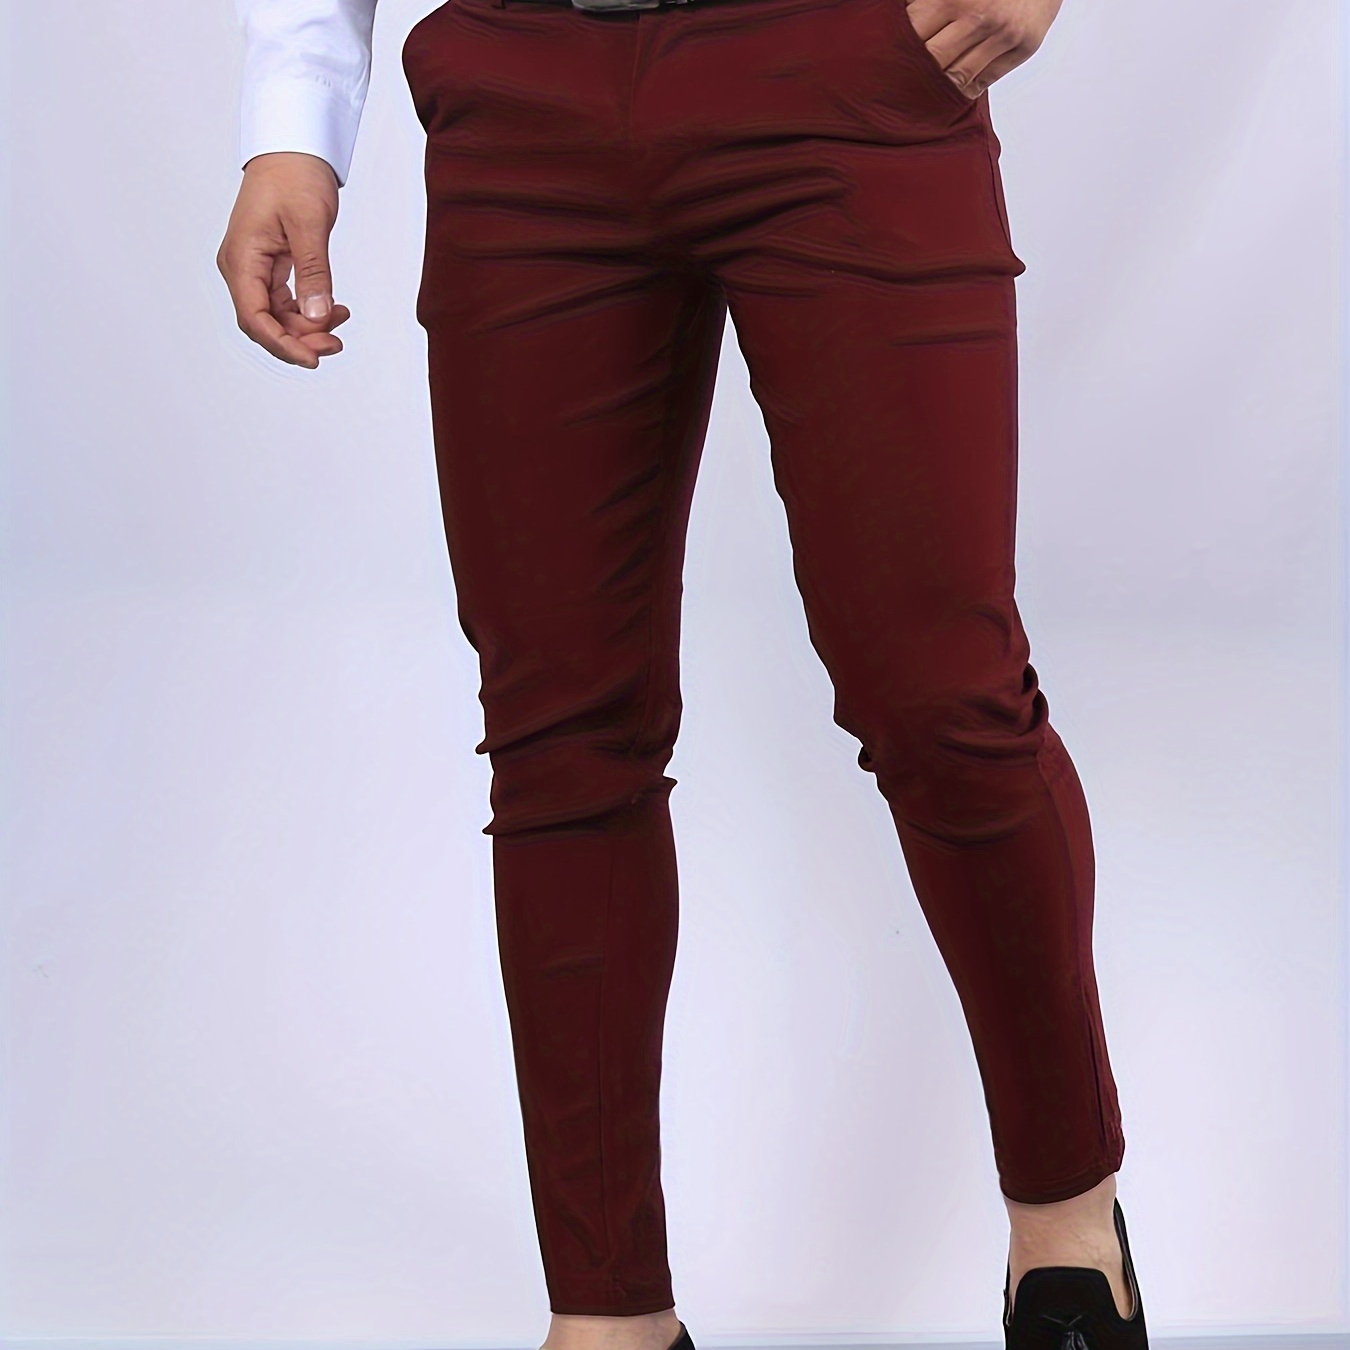 

Slim Fit Elegant Slacks, Men's Casual Vintage Style Slightly Stretch Dress Pants For All Seasons Business Banquet Dinner